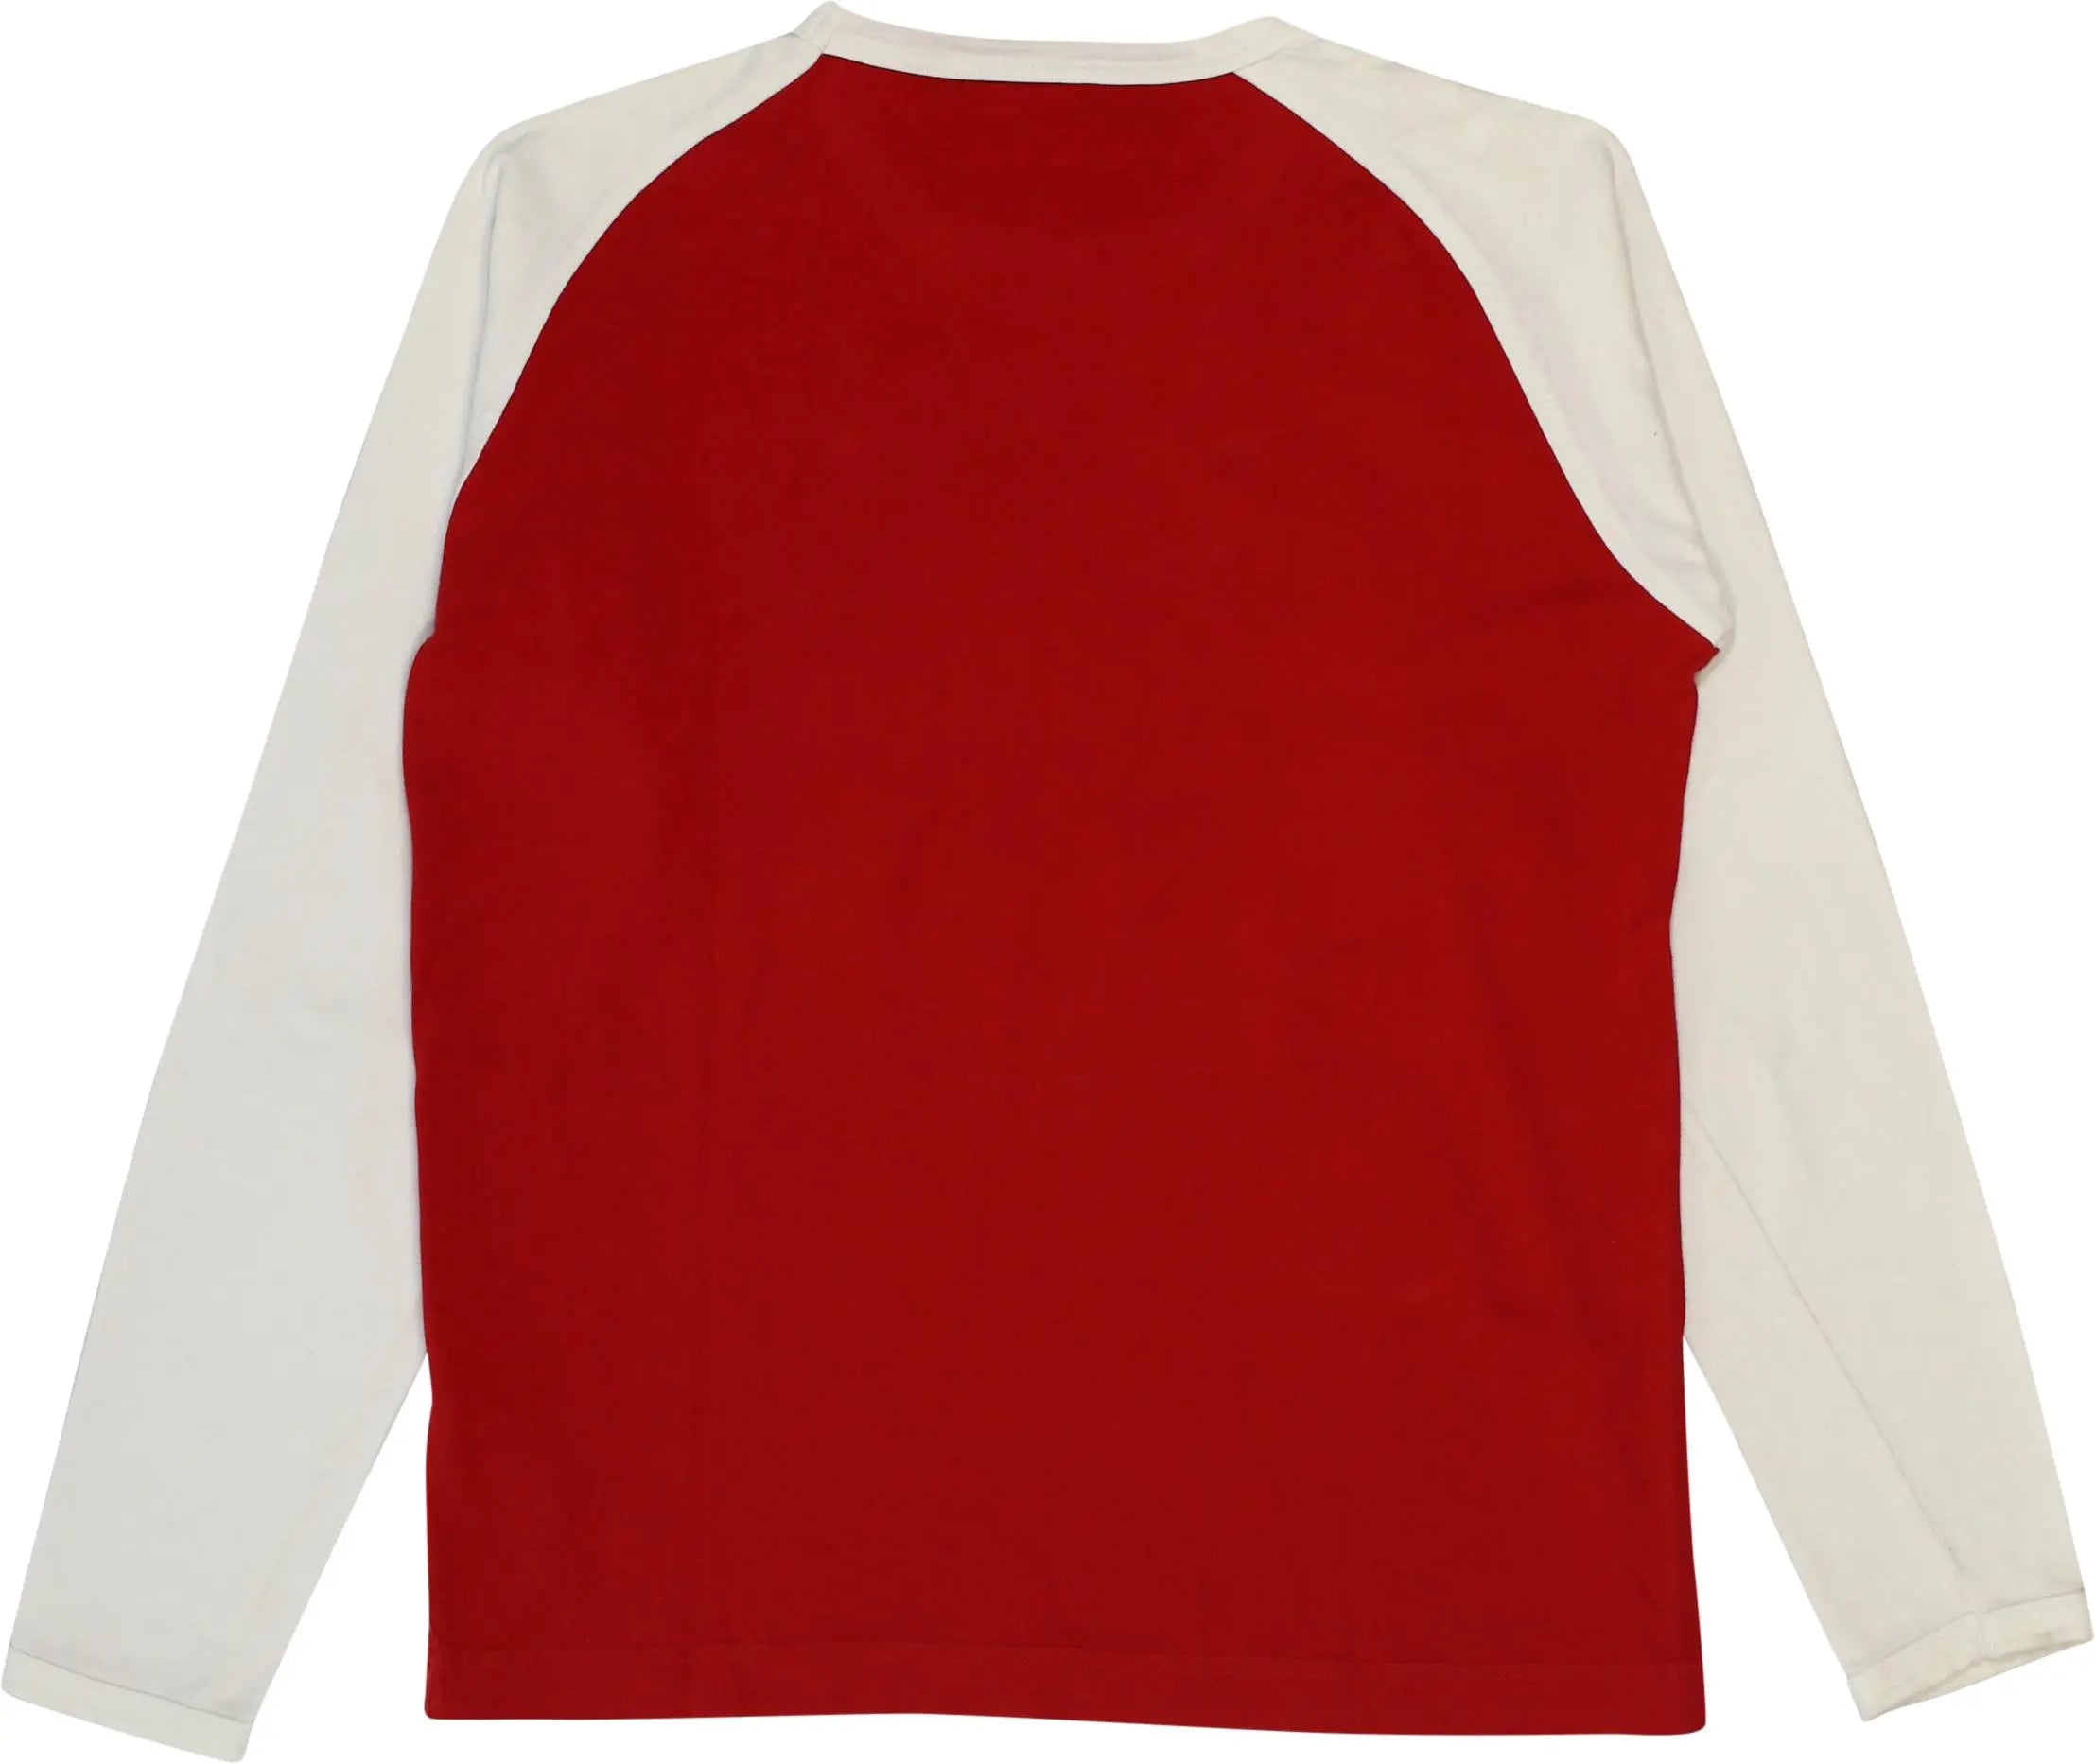 Puma - Raglan Long Sleeve Shirt by Puma- ThriftTale.com - Vintage and second handclothing